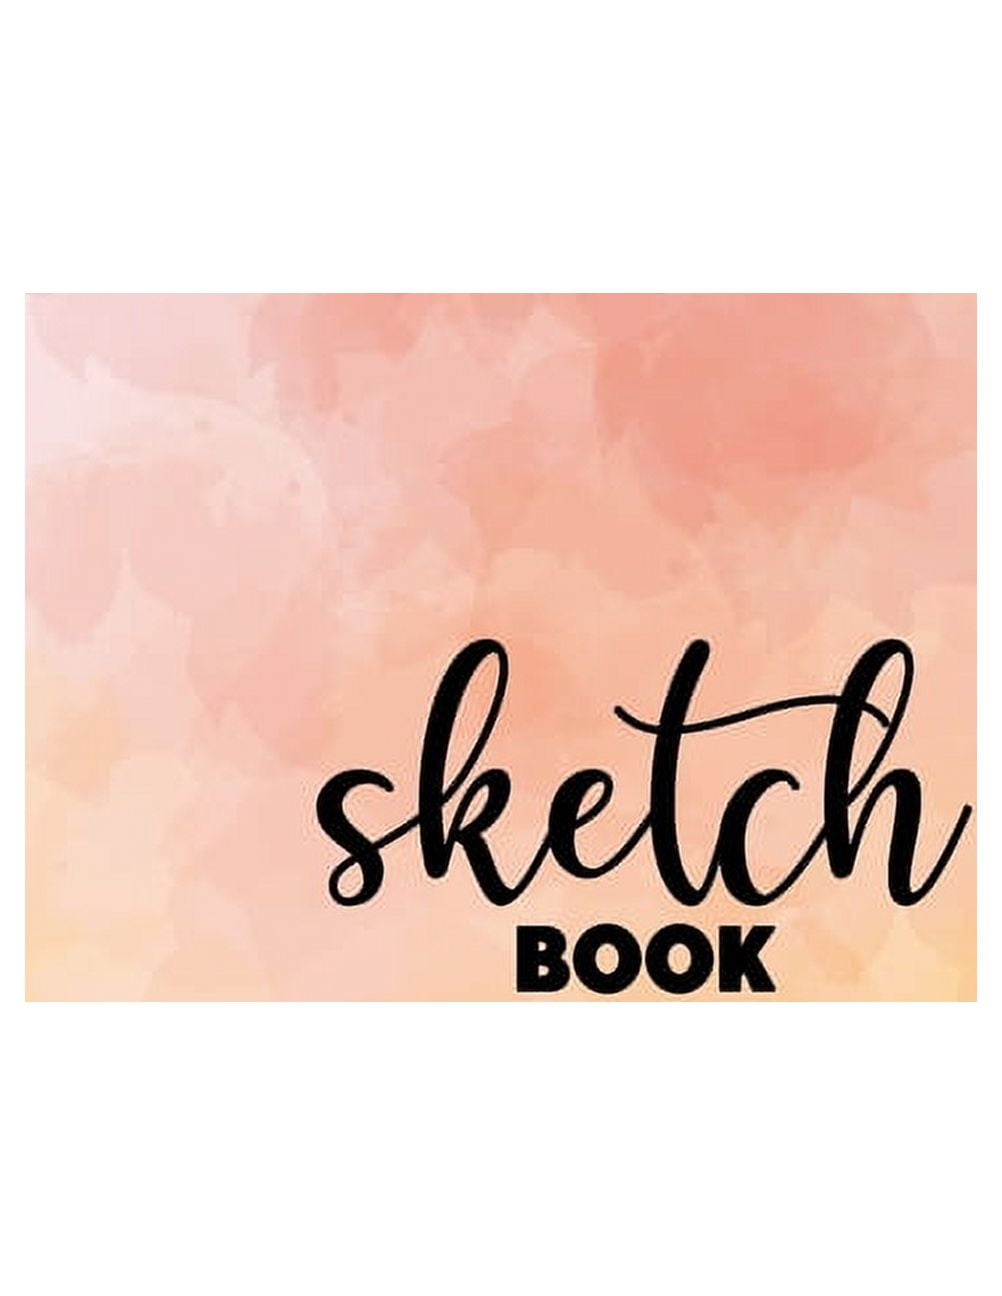 Little Artist Sketch Book: Large Sketchbook For Kids For Drawing, Doodling  And Sketching: Blank Paper Sketch Book for Drawing, 100 Pages, 8.5 x 11